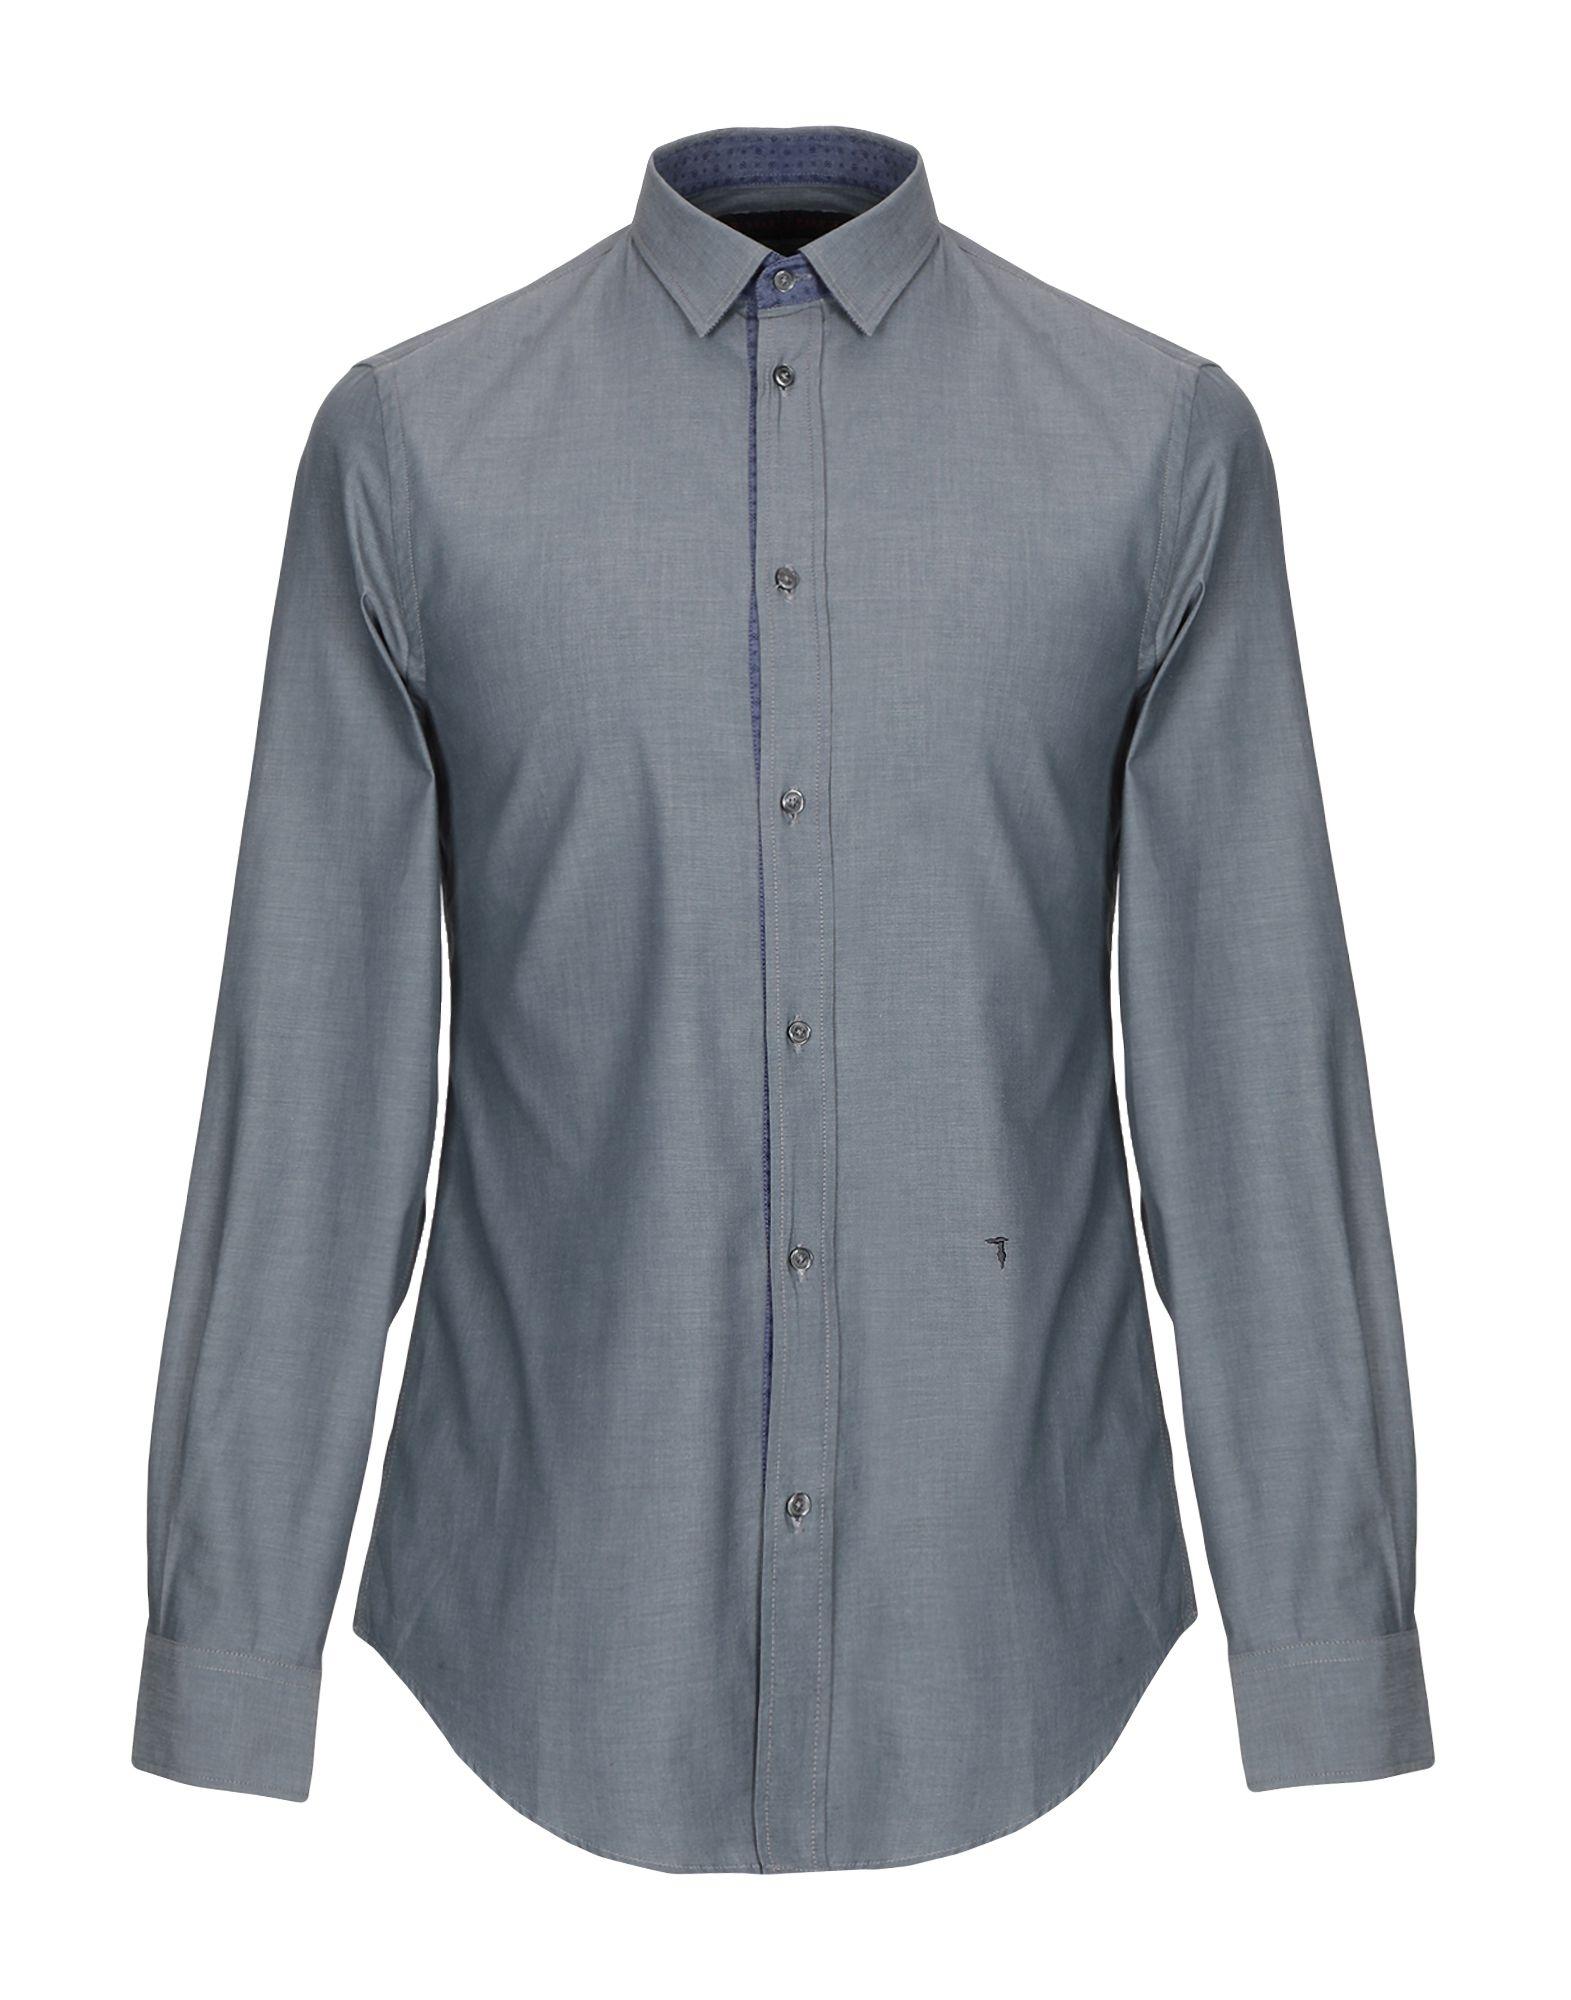 Trussardi Shirt in Grey (Gray) for Men - Lyst